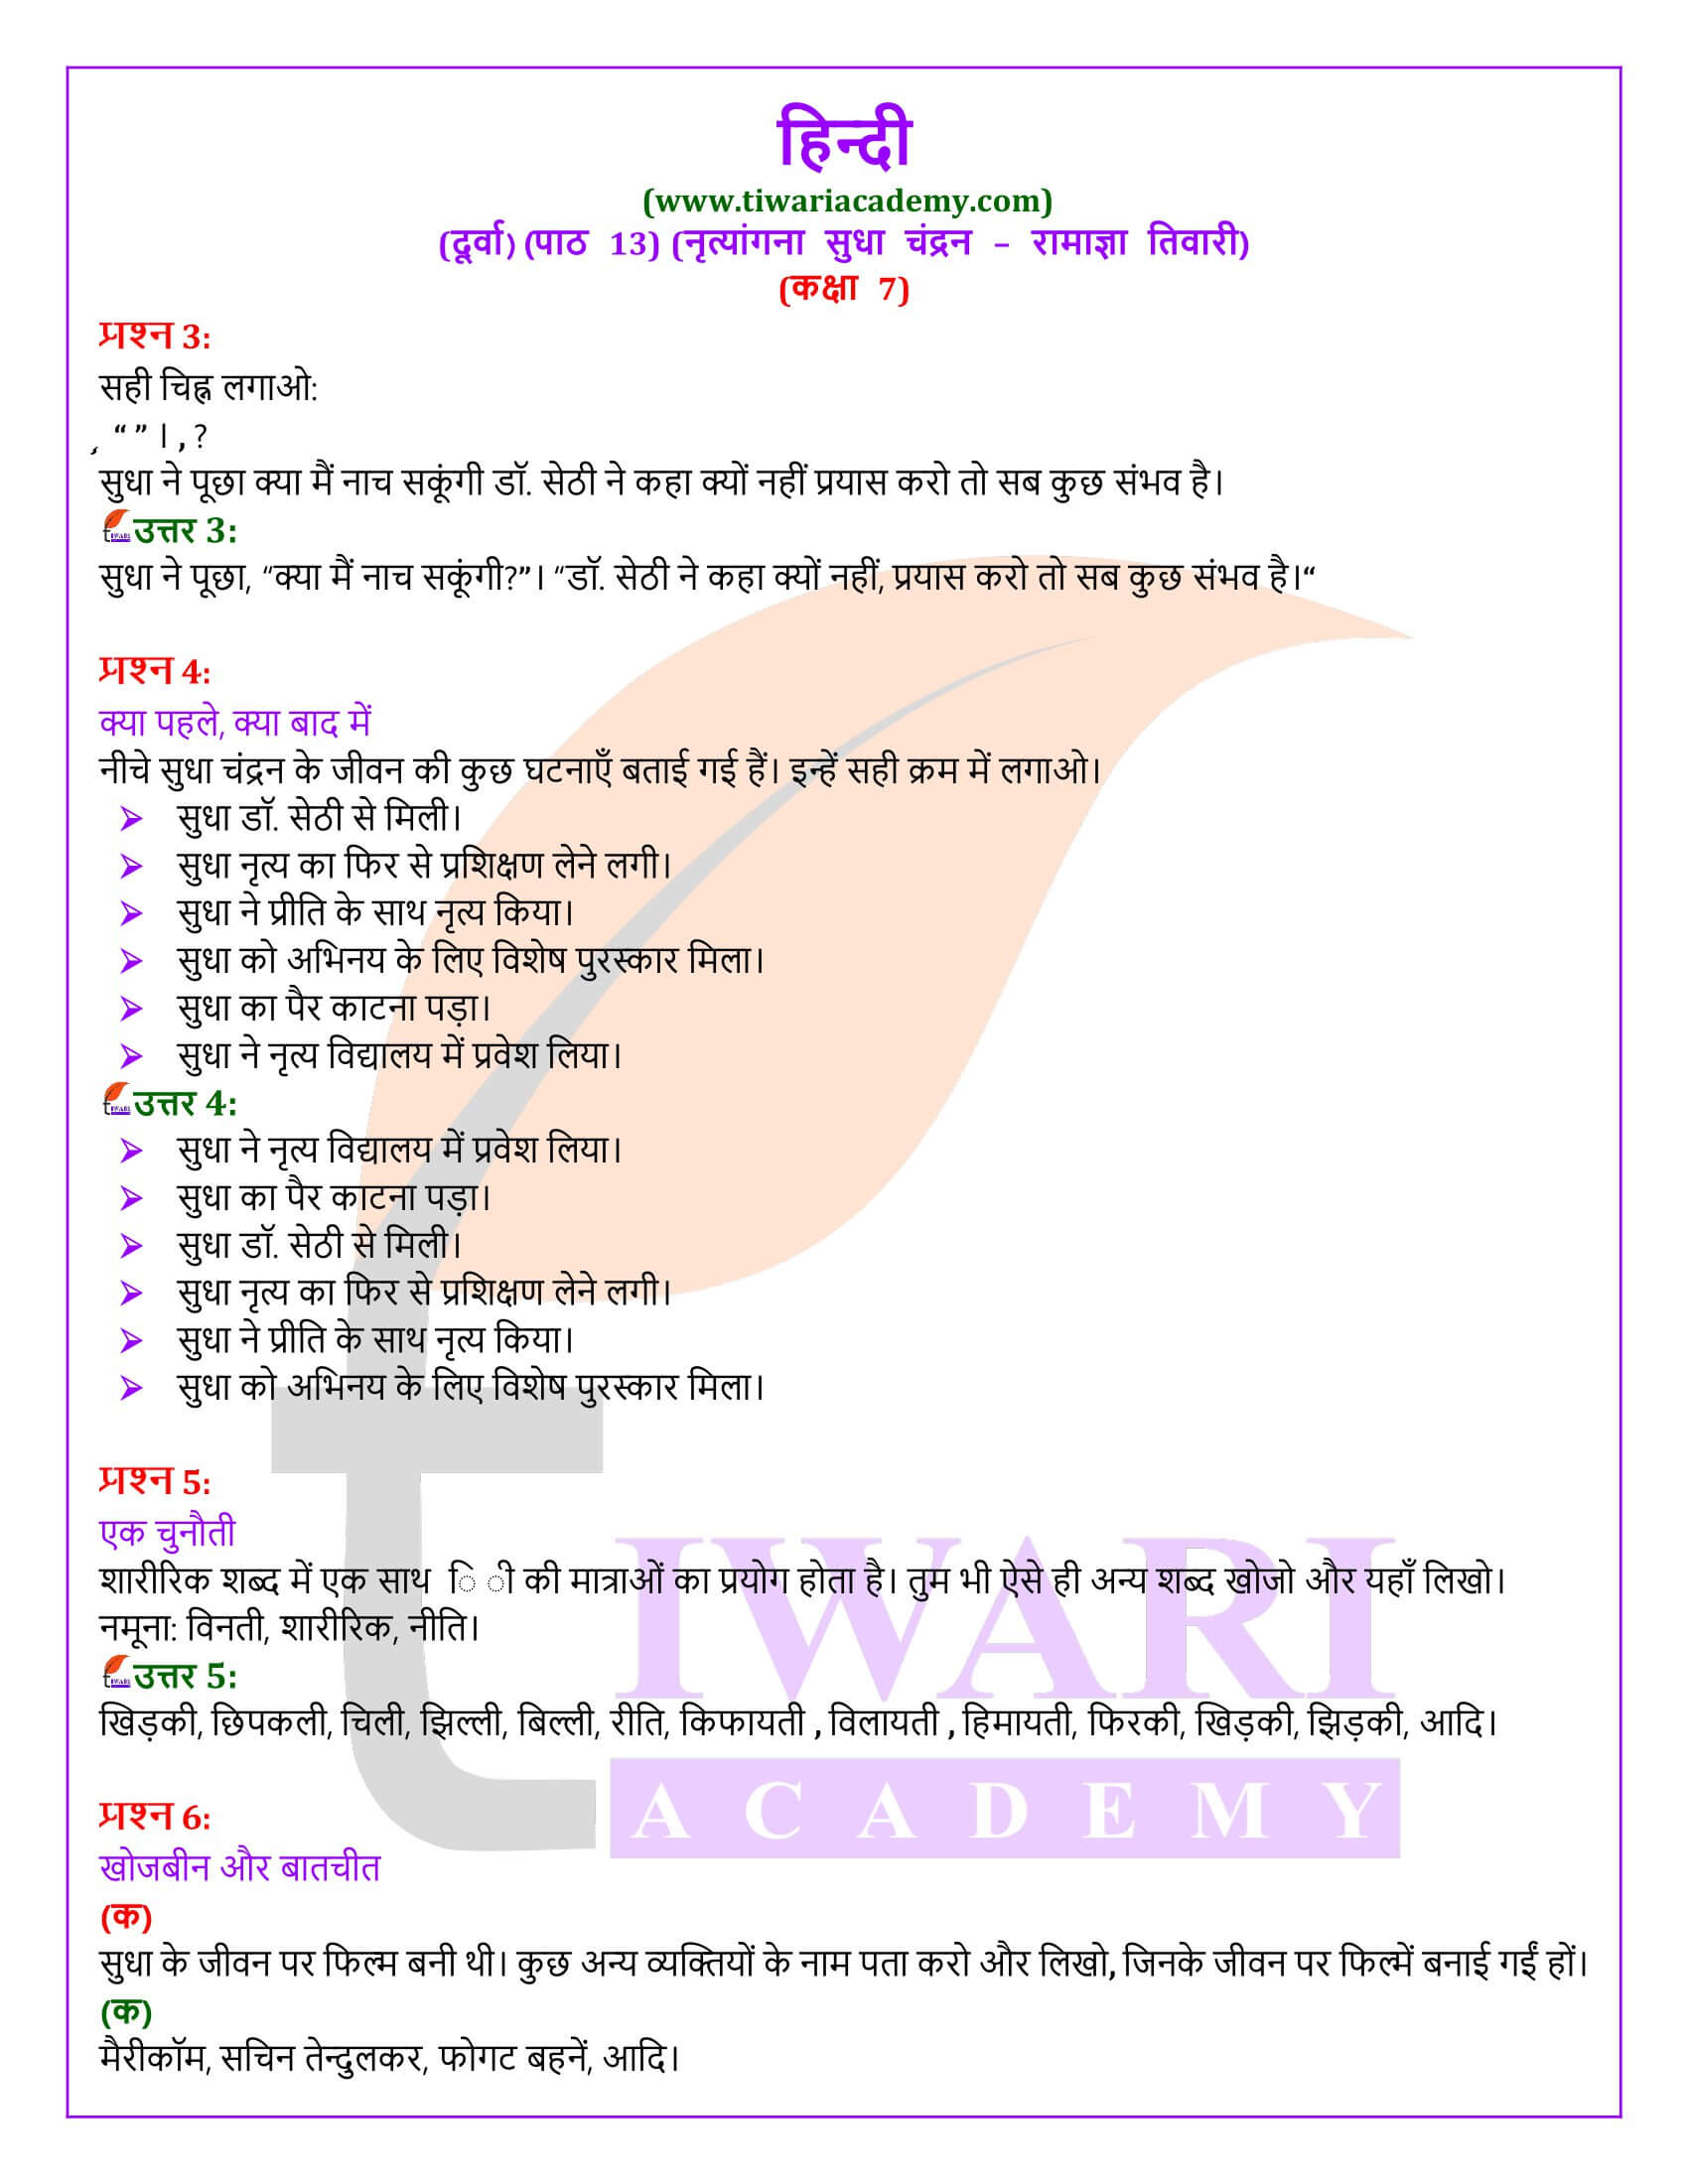 कक्षा 7 हिंदी दूर्वा अध्याय 13 नृत्यांगना सुधा चंद्रन